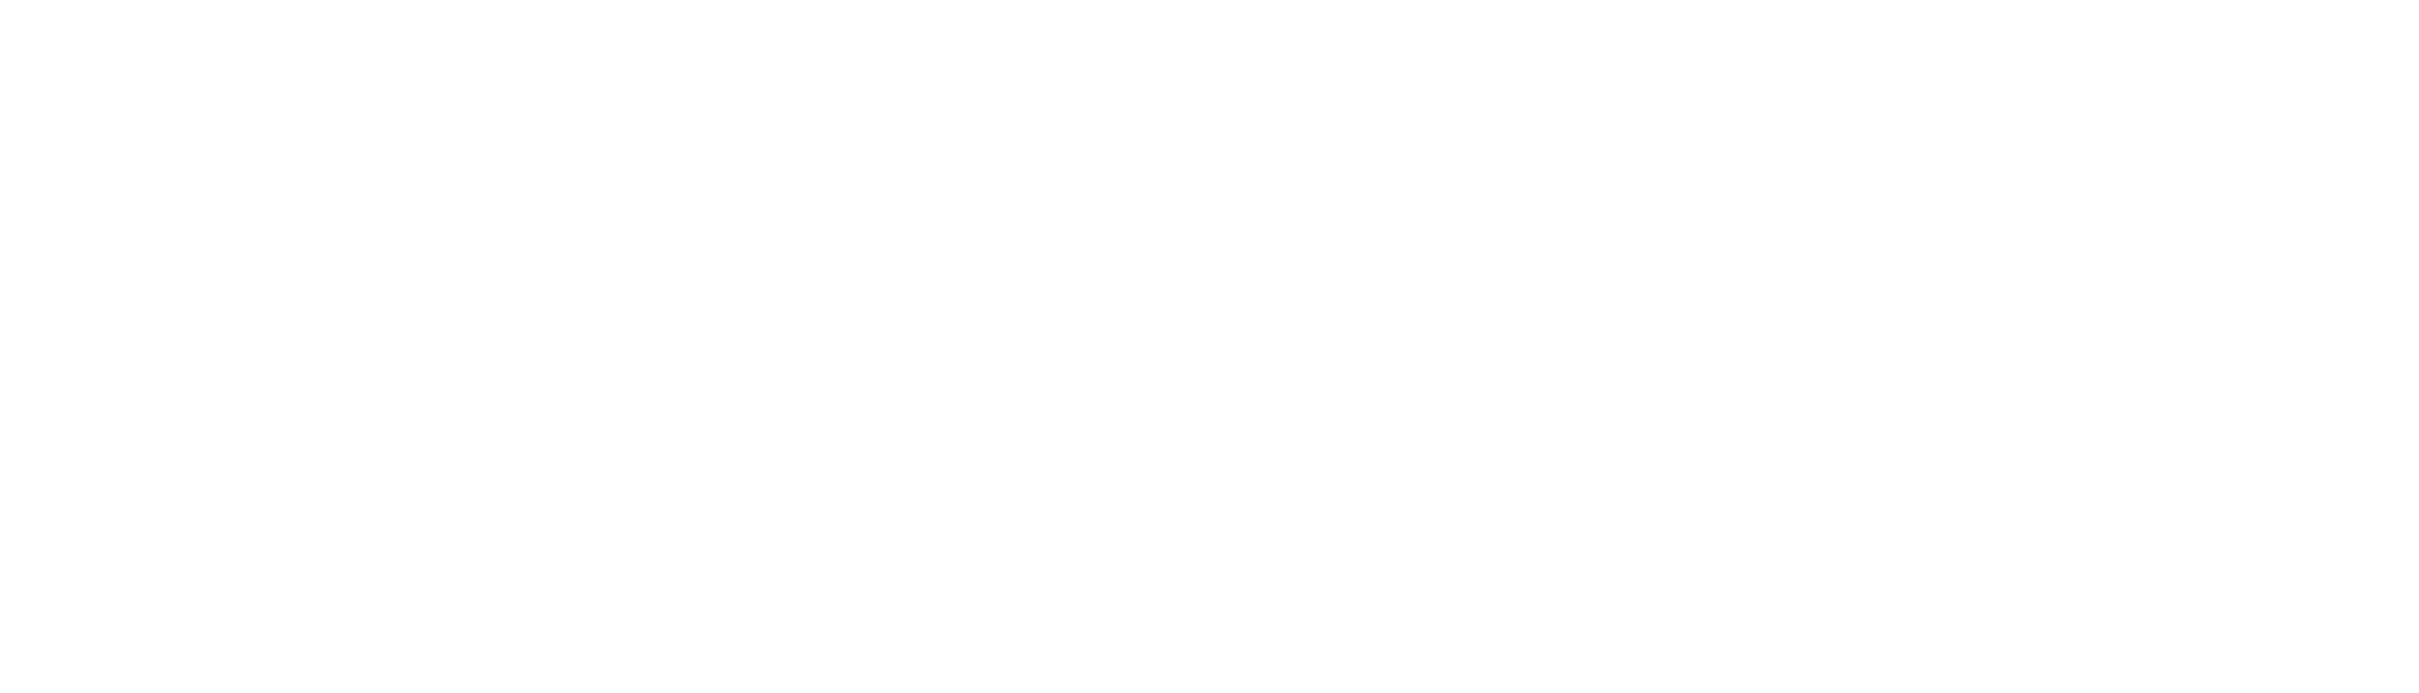 Pancar Creative Studio